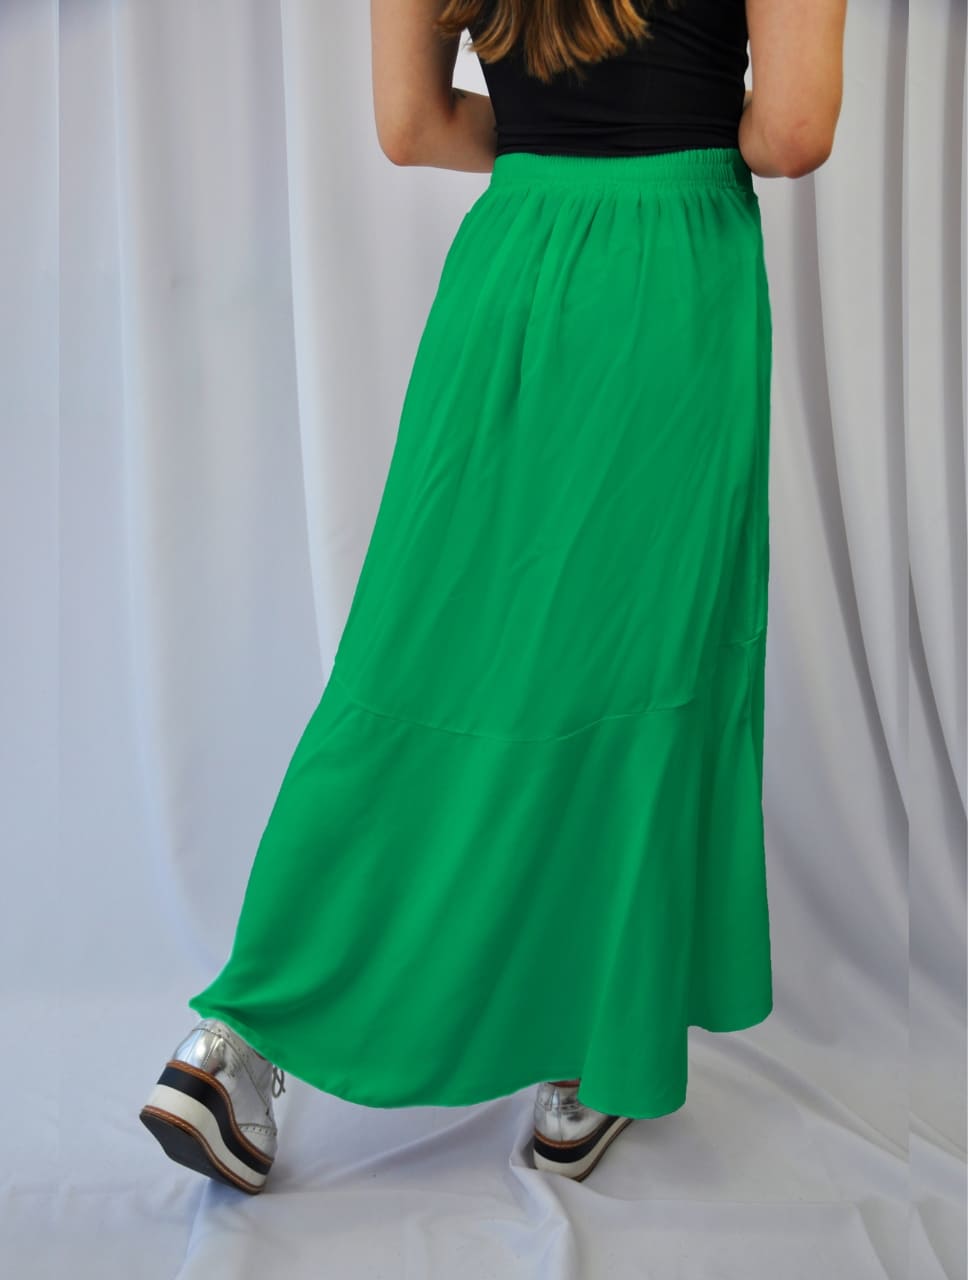 Falda para Mujer Verde Cali Asimétrica con Bolero - Bahamas Verde Cali